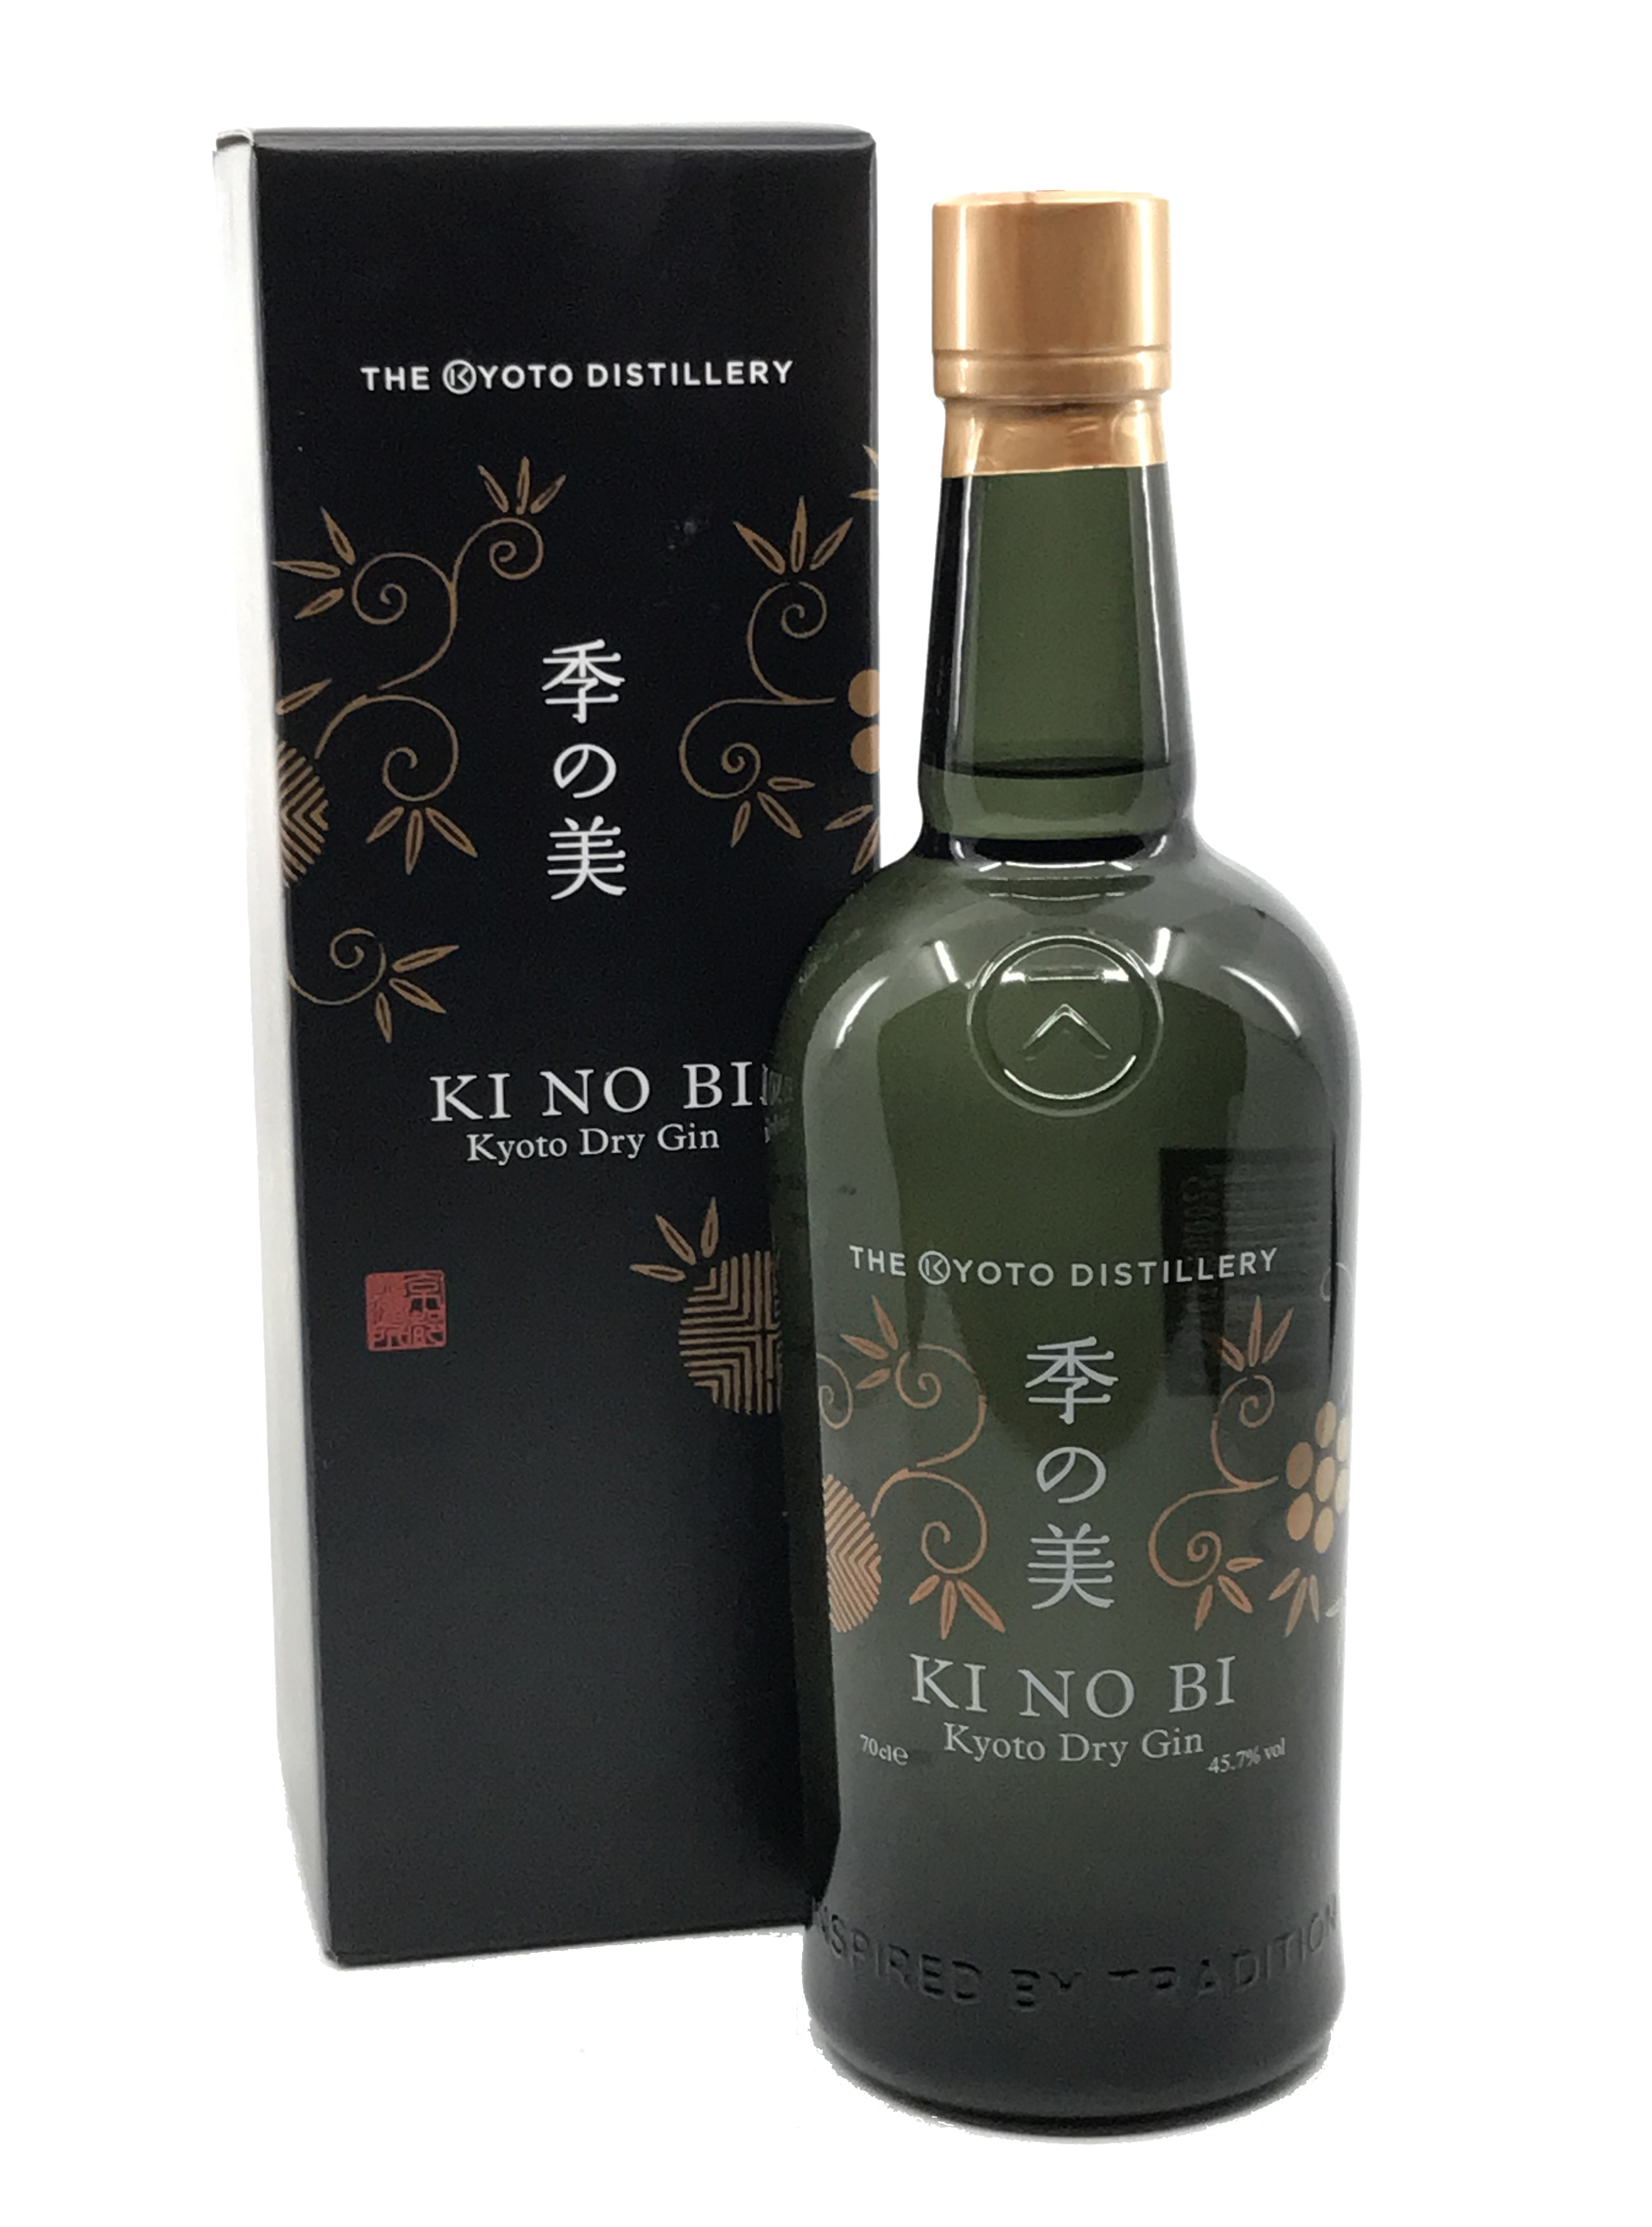 KI NO BI Classic - Kyoto Dry Gin - 0,7l - 45,7% vol. Alk. - Kinobi